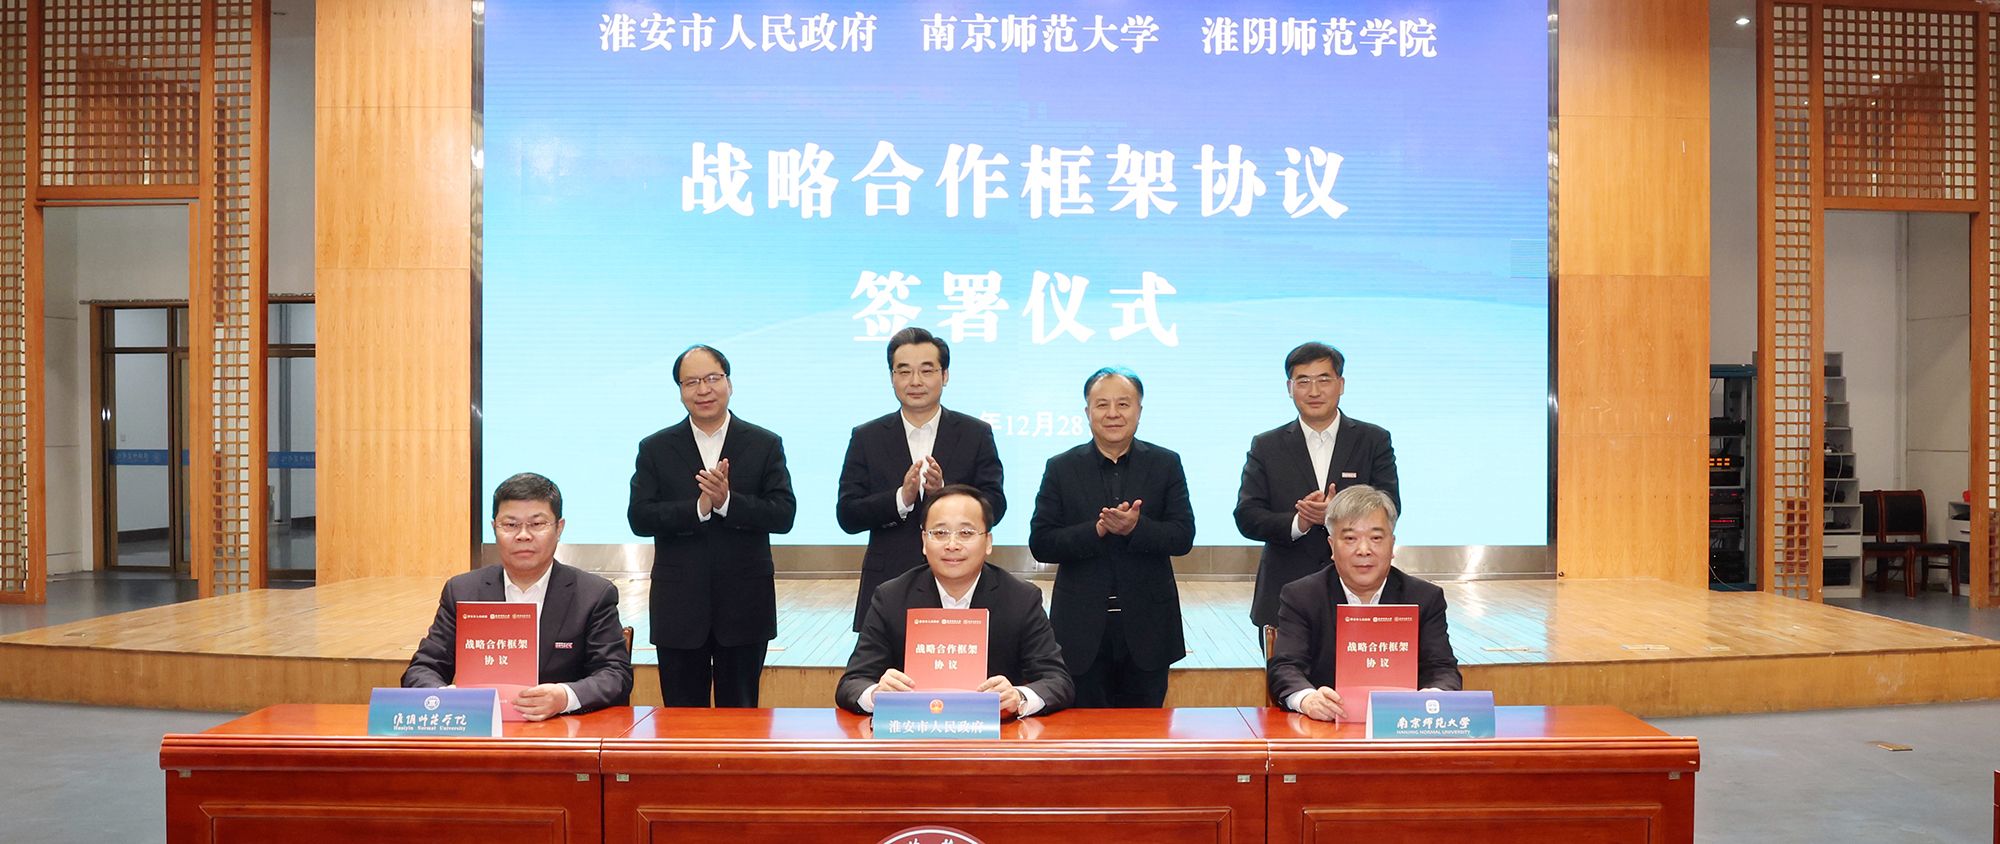 ope体育app与淮安市人民政府、南京师范大学签署战略合作框架协议